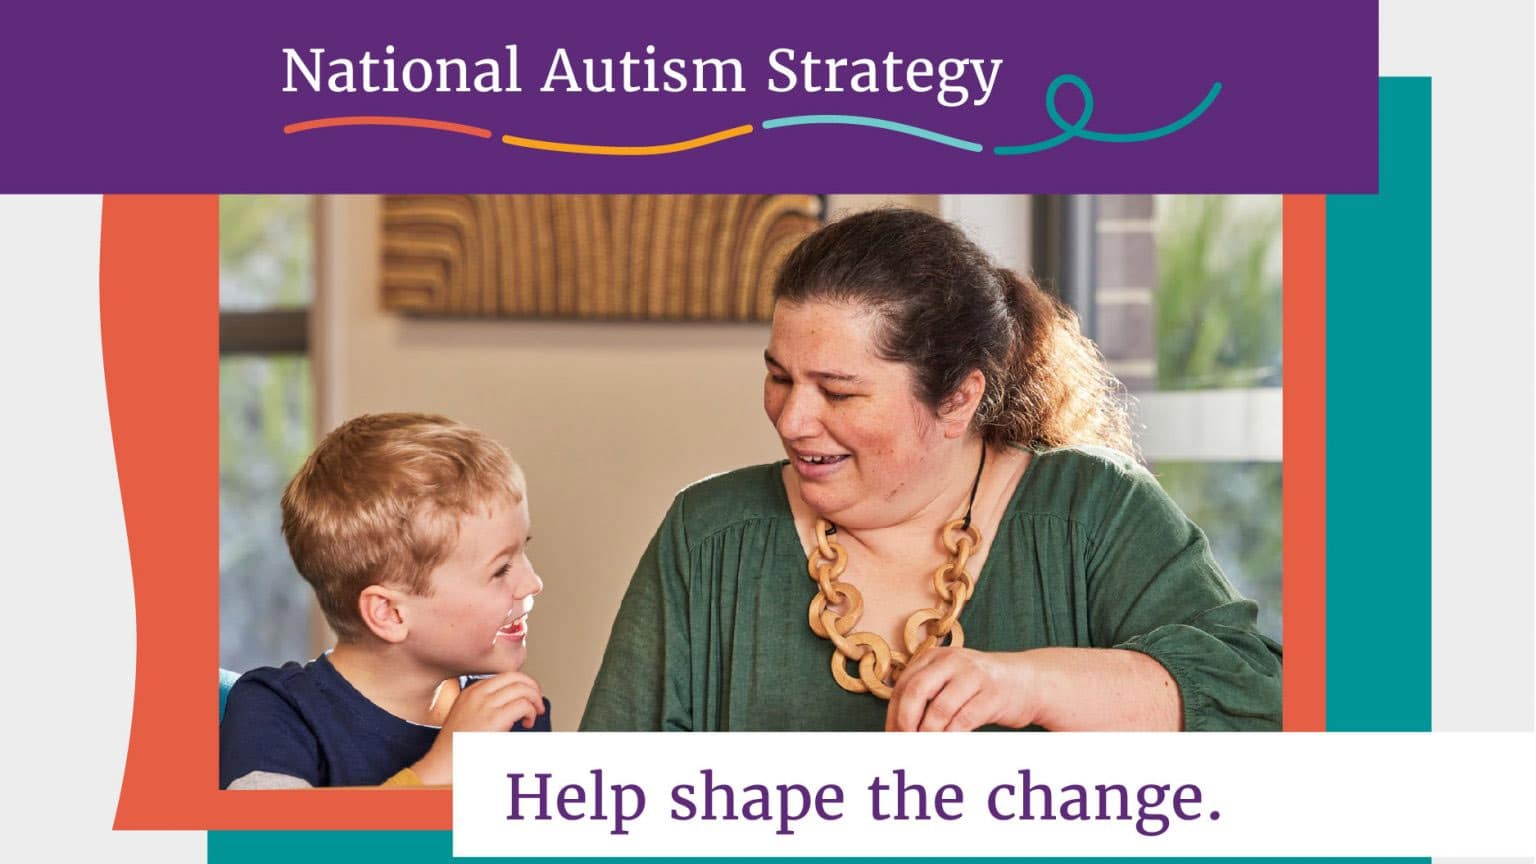 National Autism Strategy community consultation